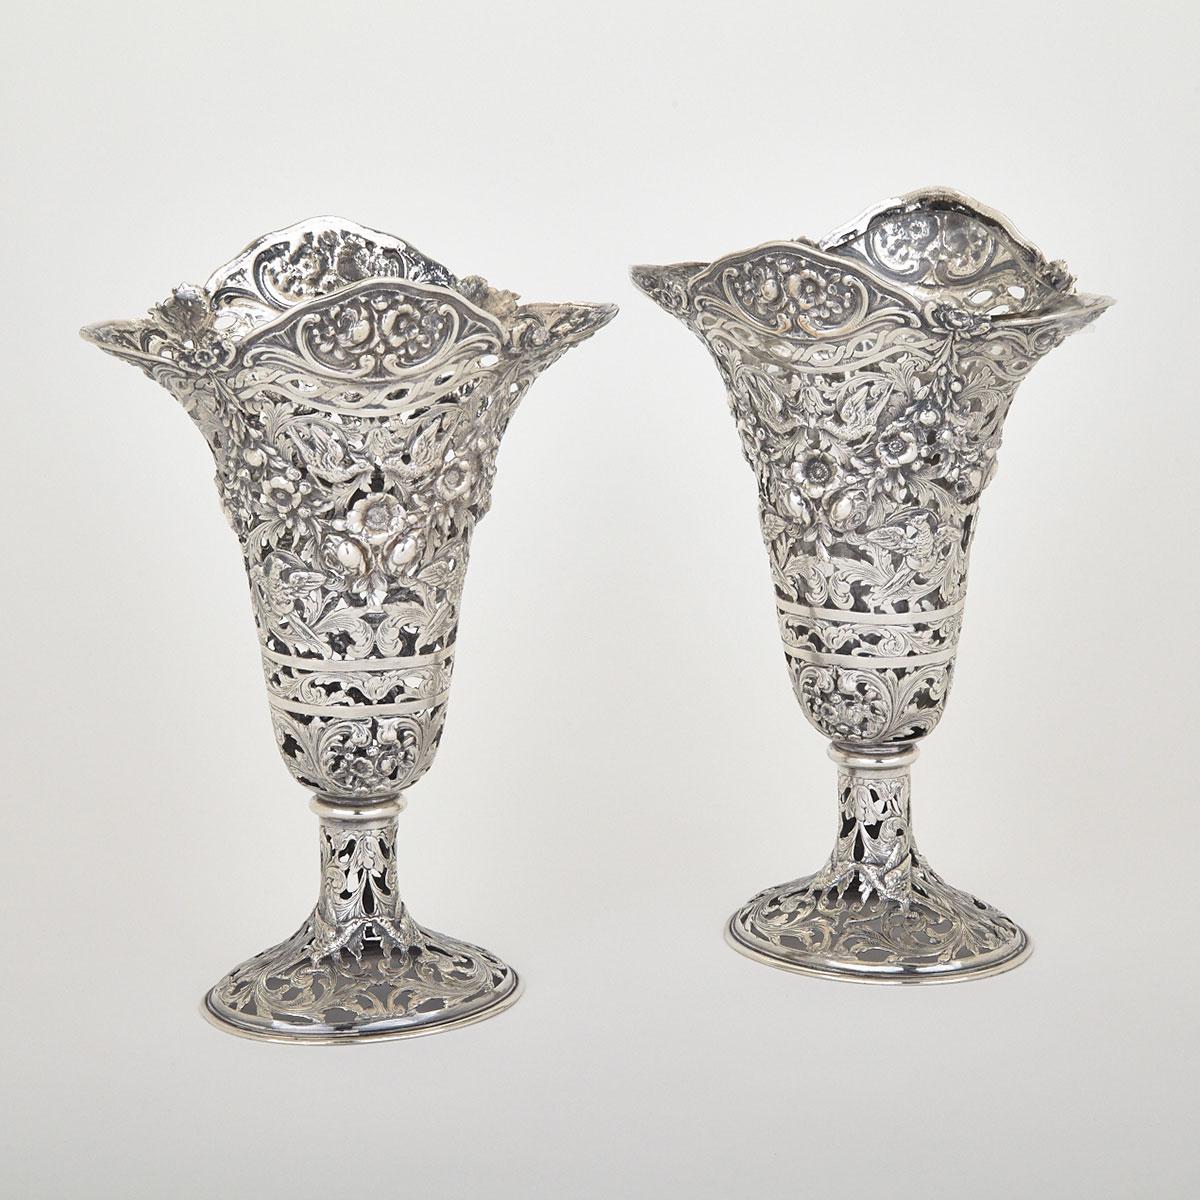 Pair of German Silver Vases, J.L. Schlingloff, Hanau, early 20th century